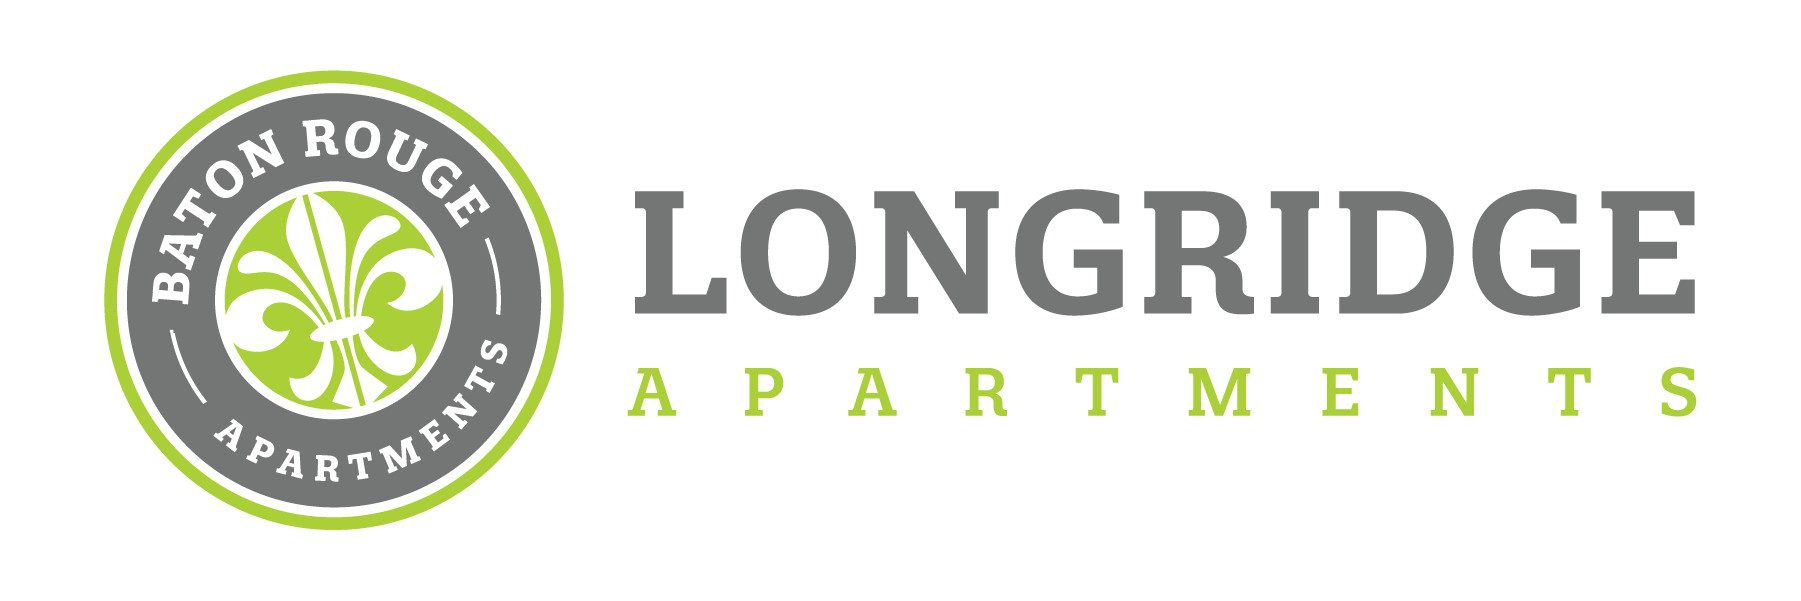 Longridge Apartments in Baton Rouge, LA